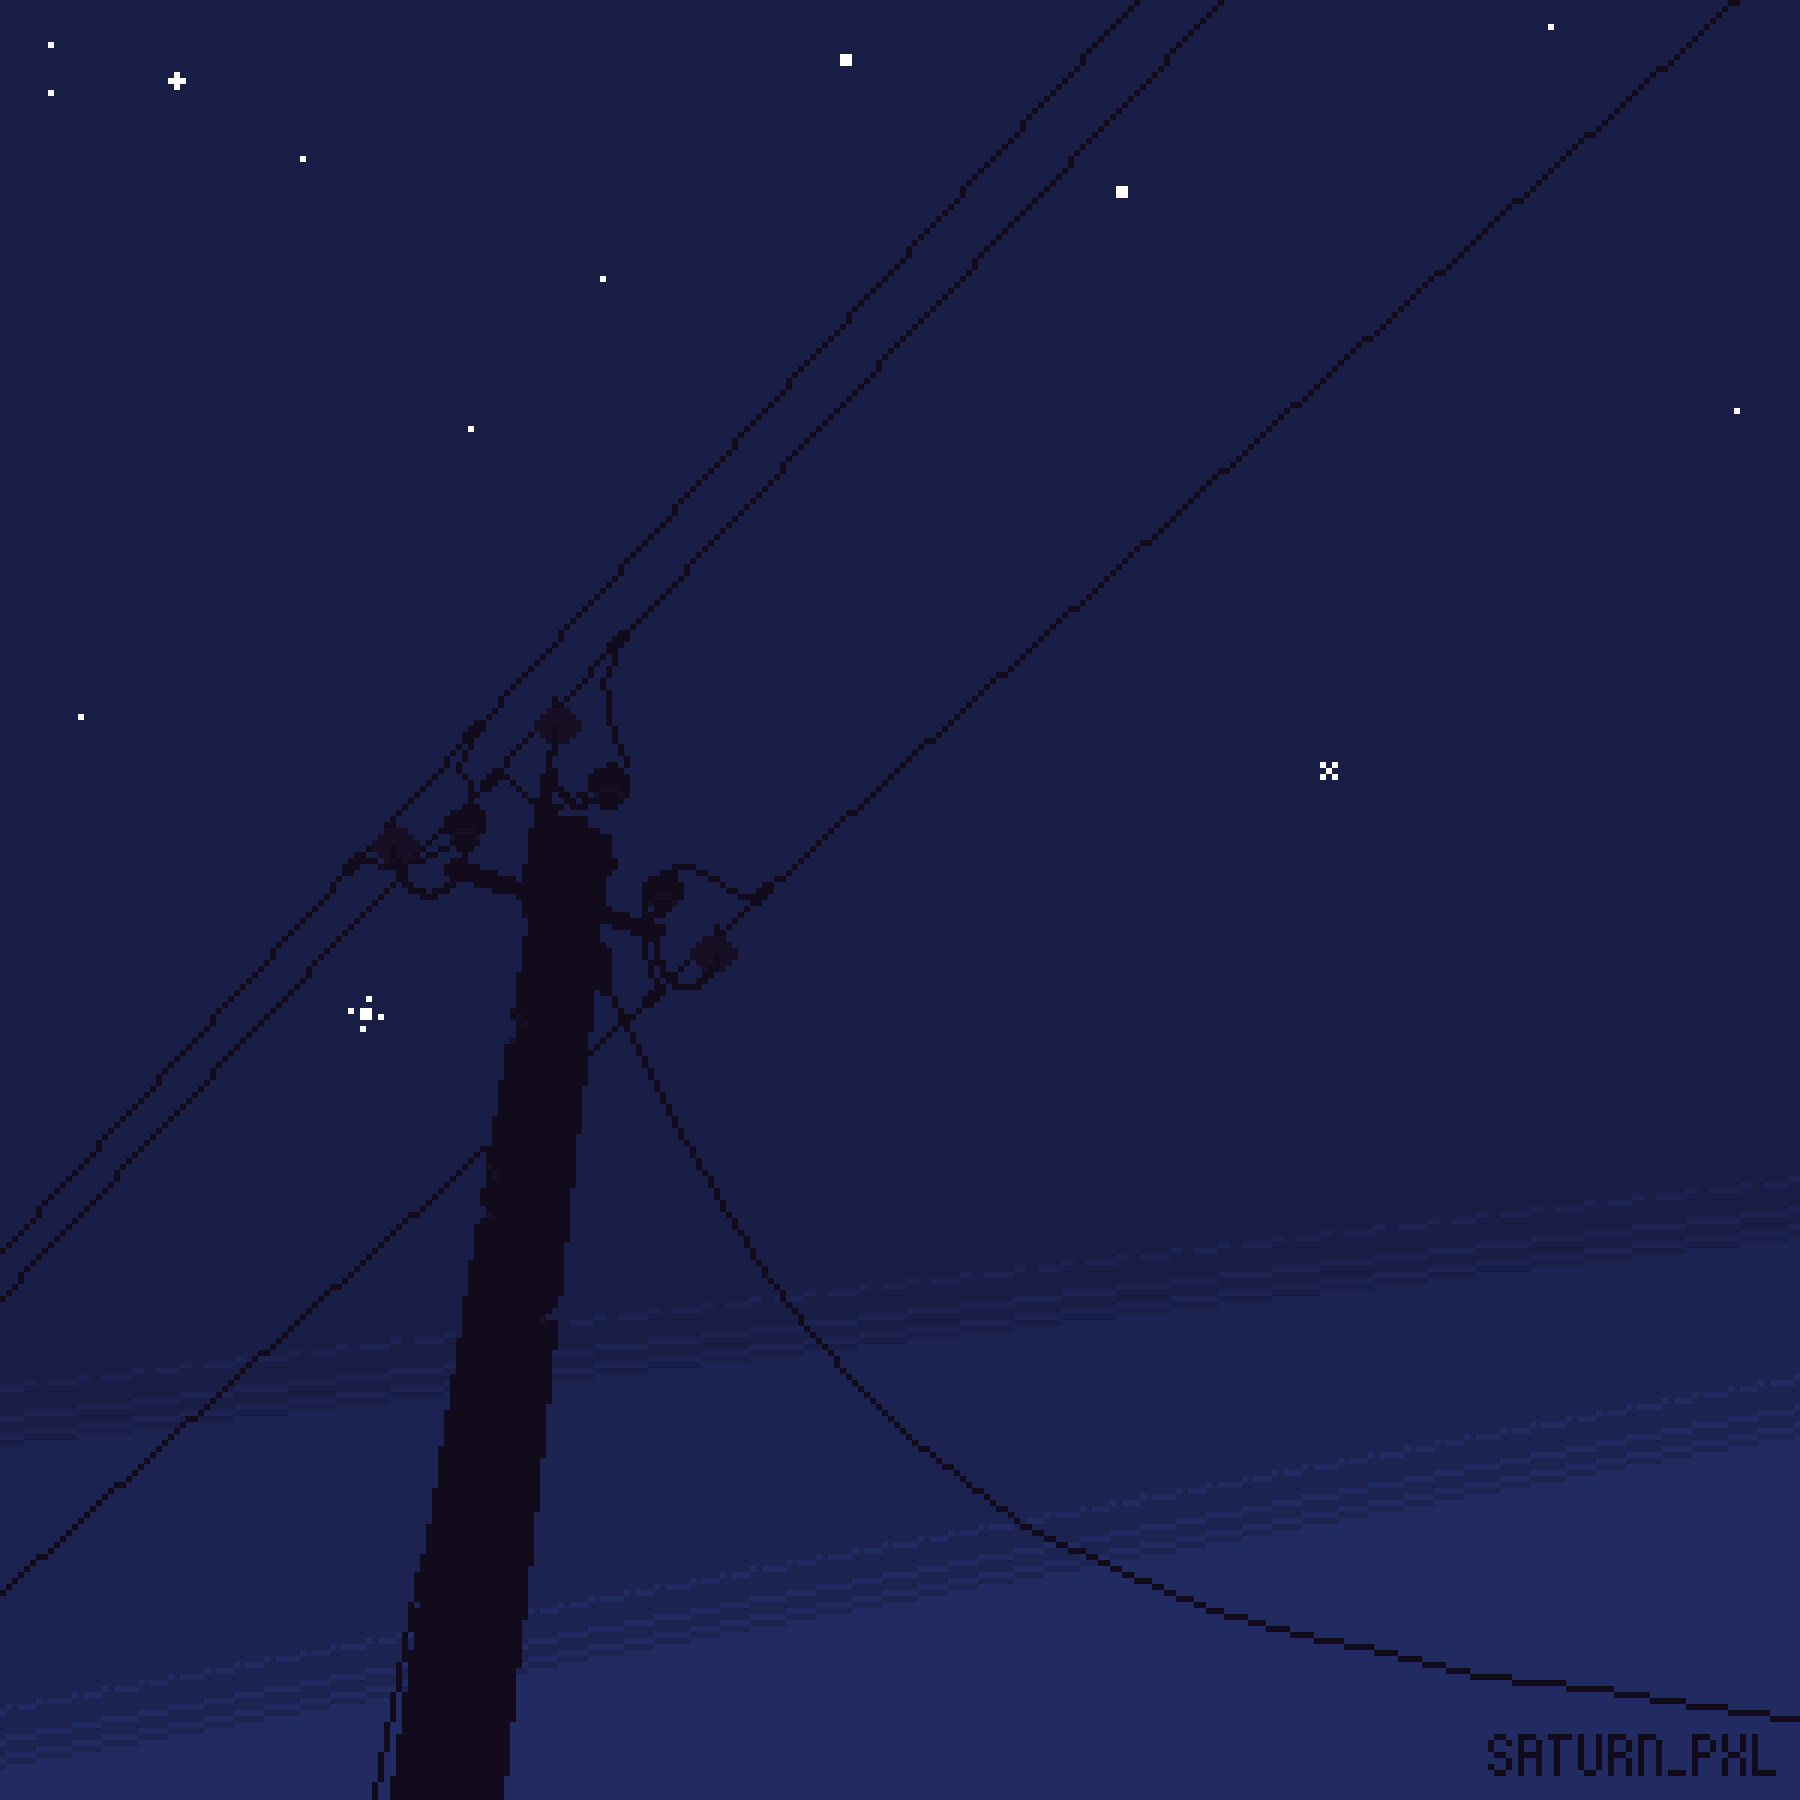 ArtStation - Electric power pole and dark infinity (17.05.22)